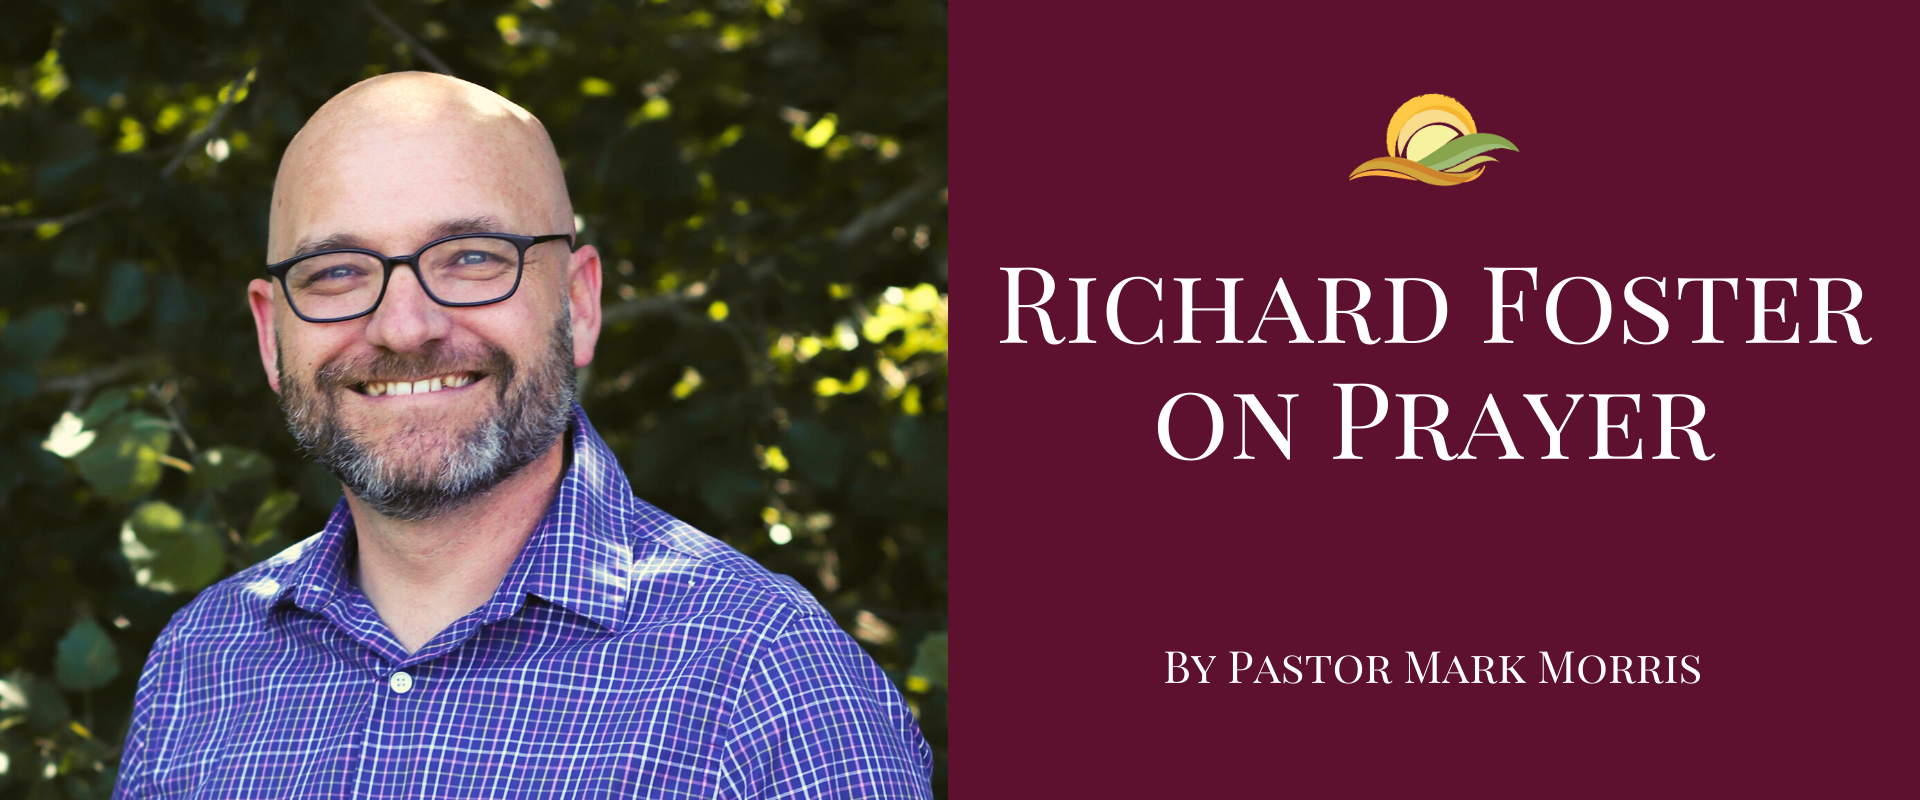 Richard Foster on Prayer — New Day Community Church